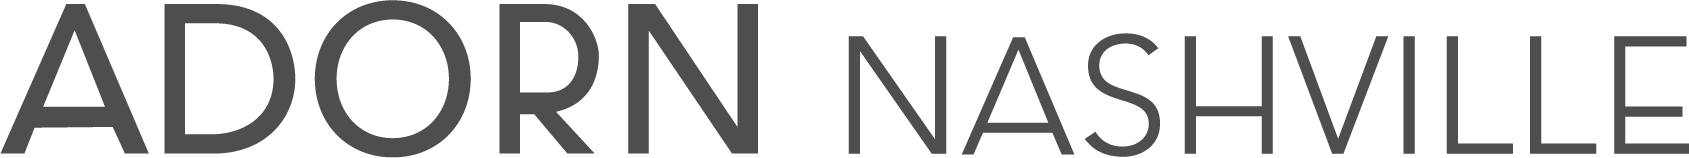 Adorn 1 Line Logo Nashville WHITE-2